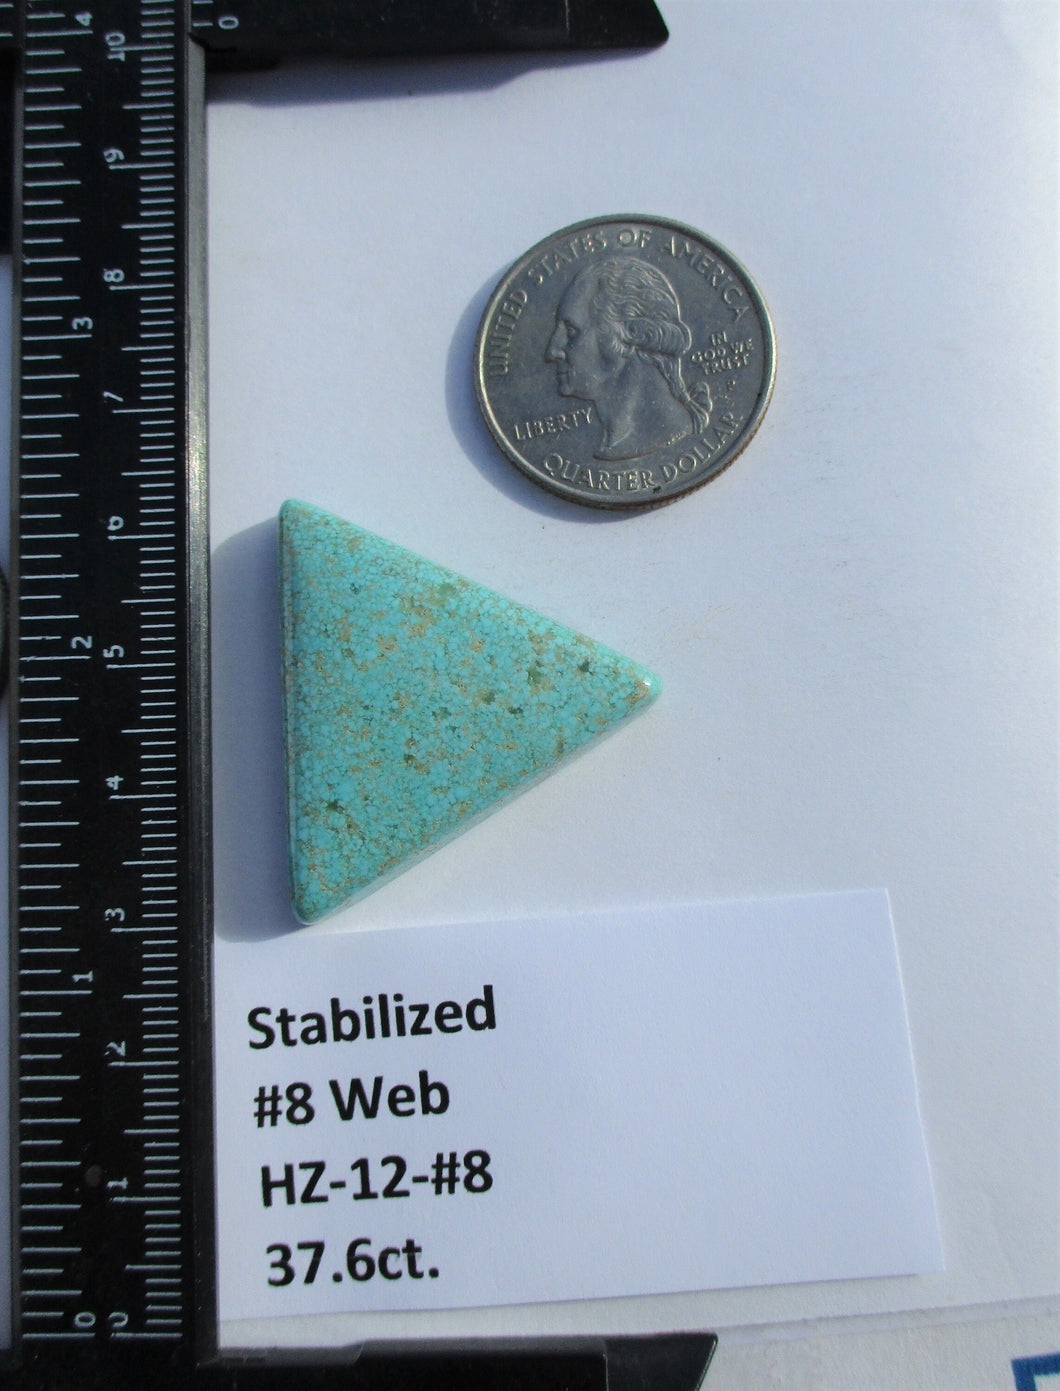 37.6 ct (34x29.5x7 mm) Stabilized Web #8 Turquoise, Cabochon Gemstone, HZ 12